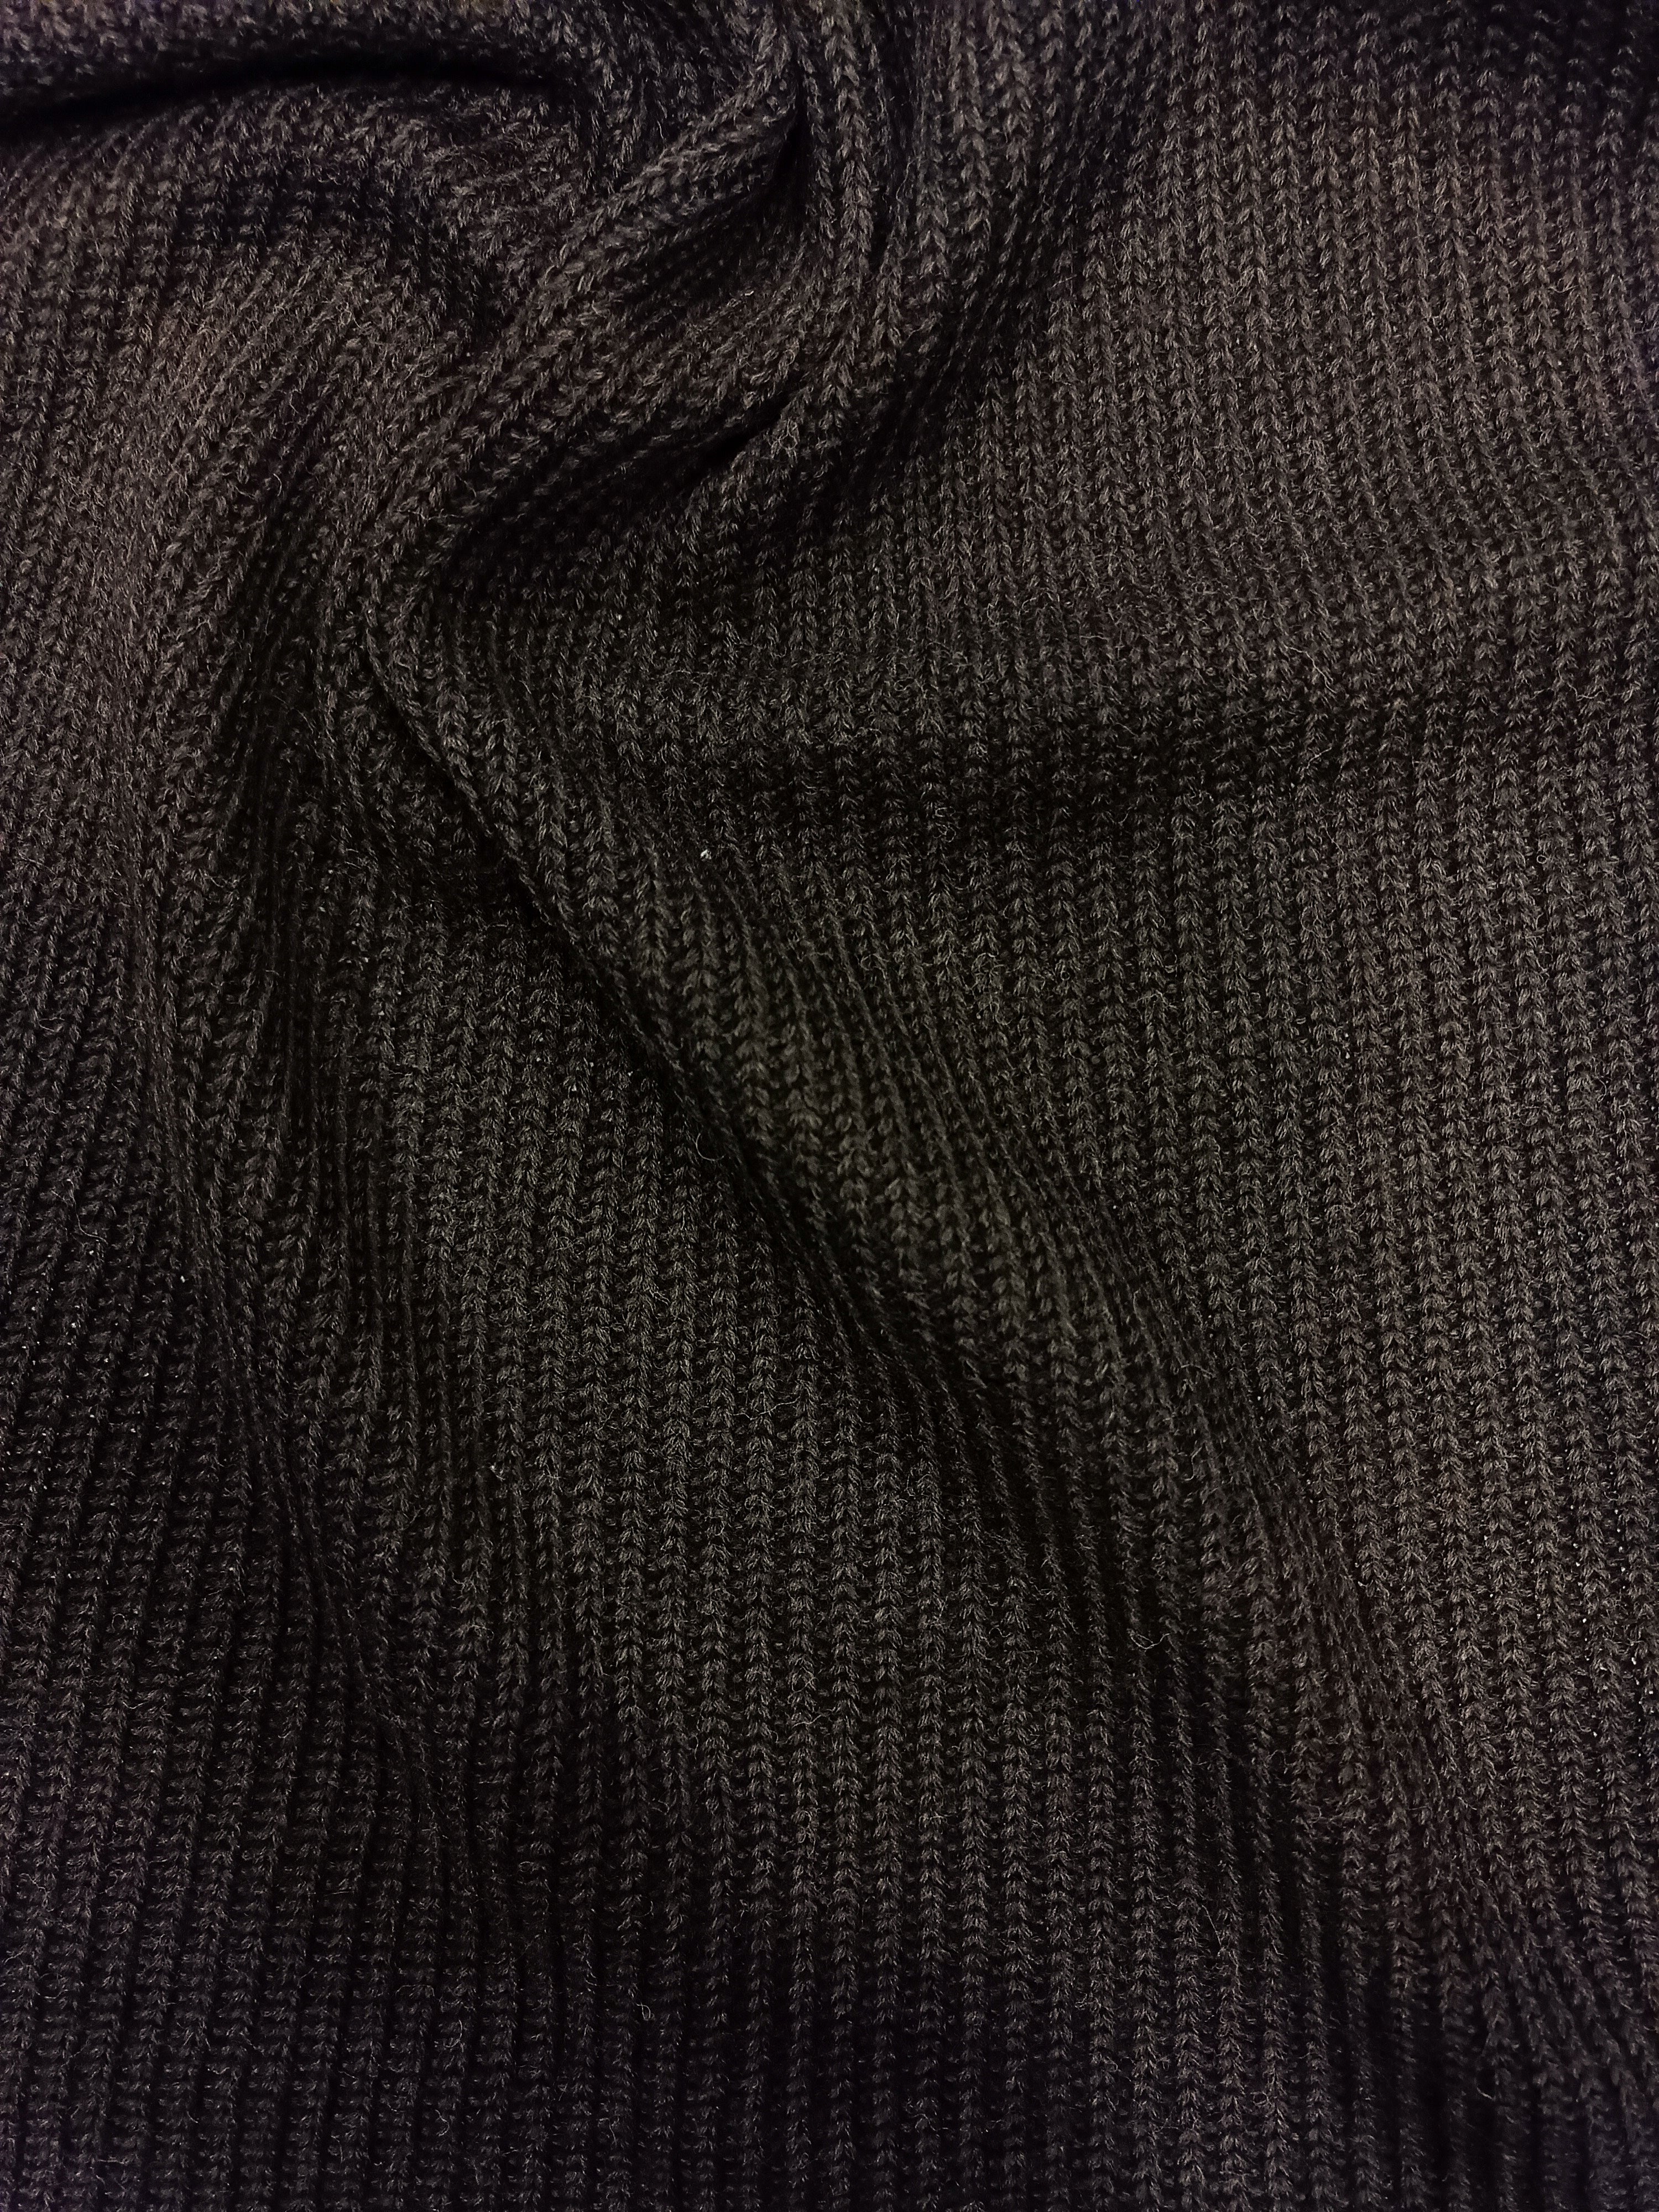 No. 657 coarse knit dark brown